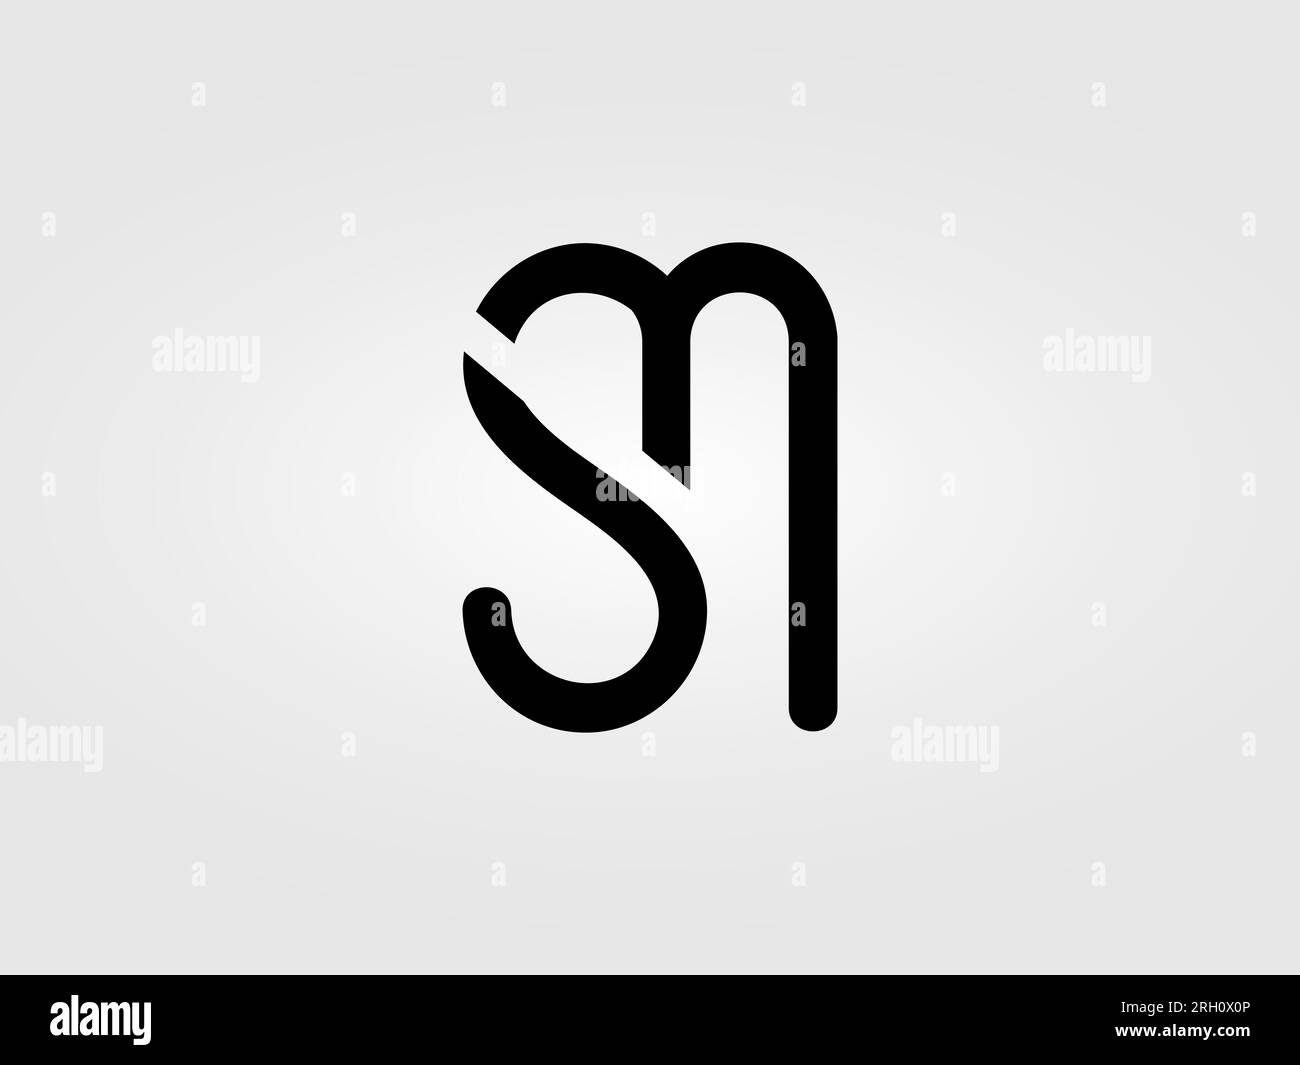 Sm Letter Original Monogram Logo Design Stock Vector (Royalty Free